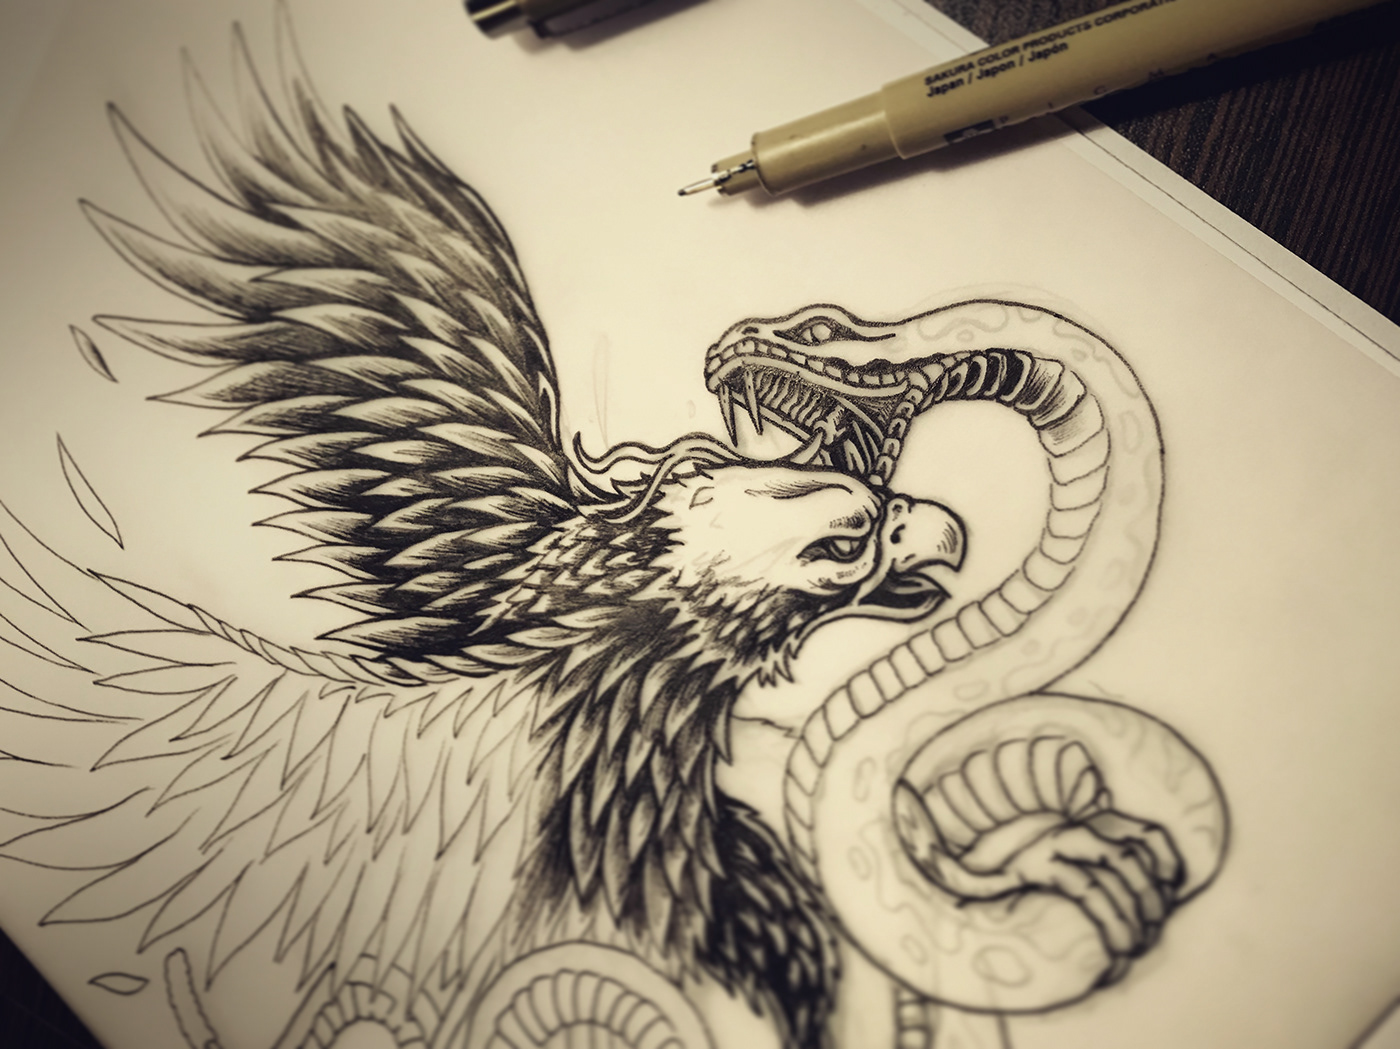 American Eagle aguila snake tattoo serpiente tatuaje t-shirt argentina ilustrador artist